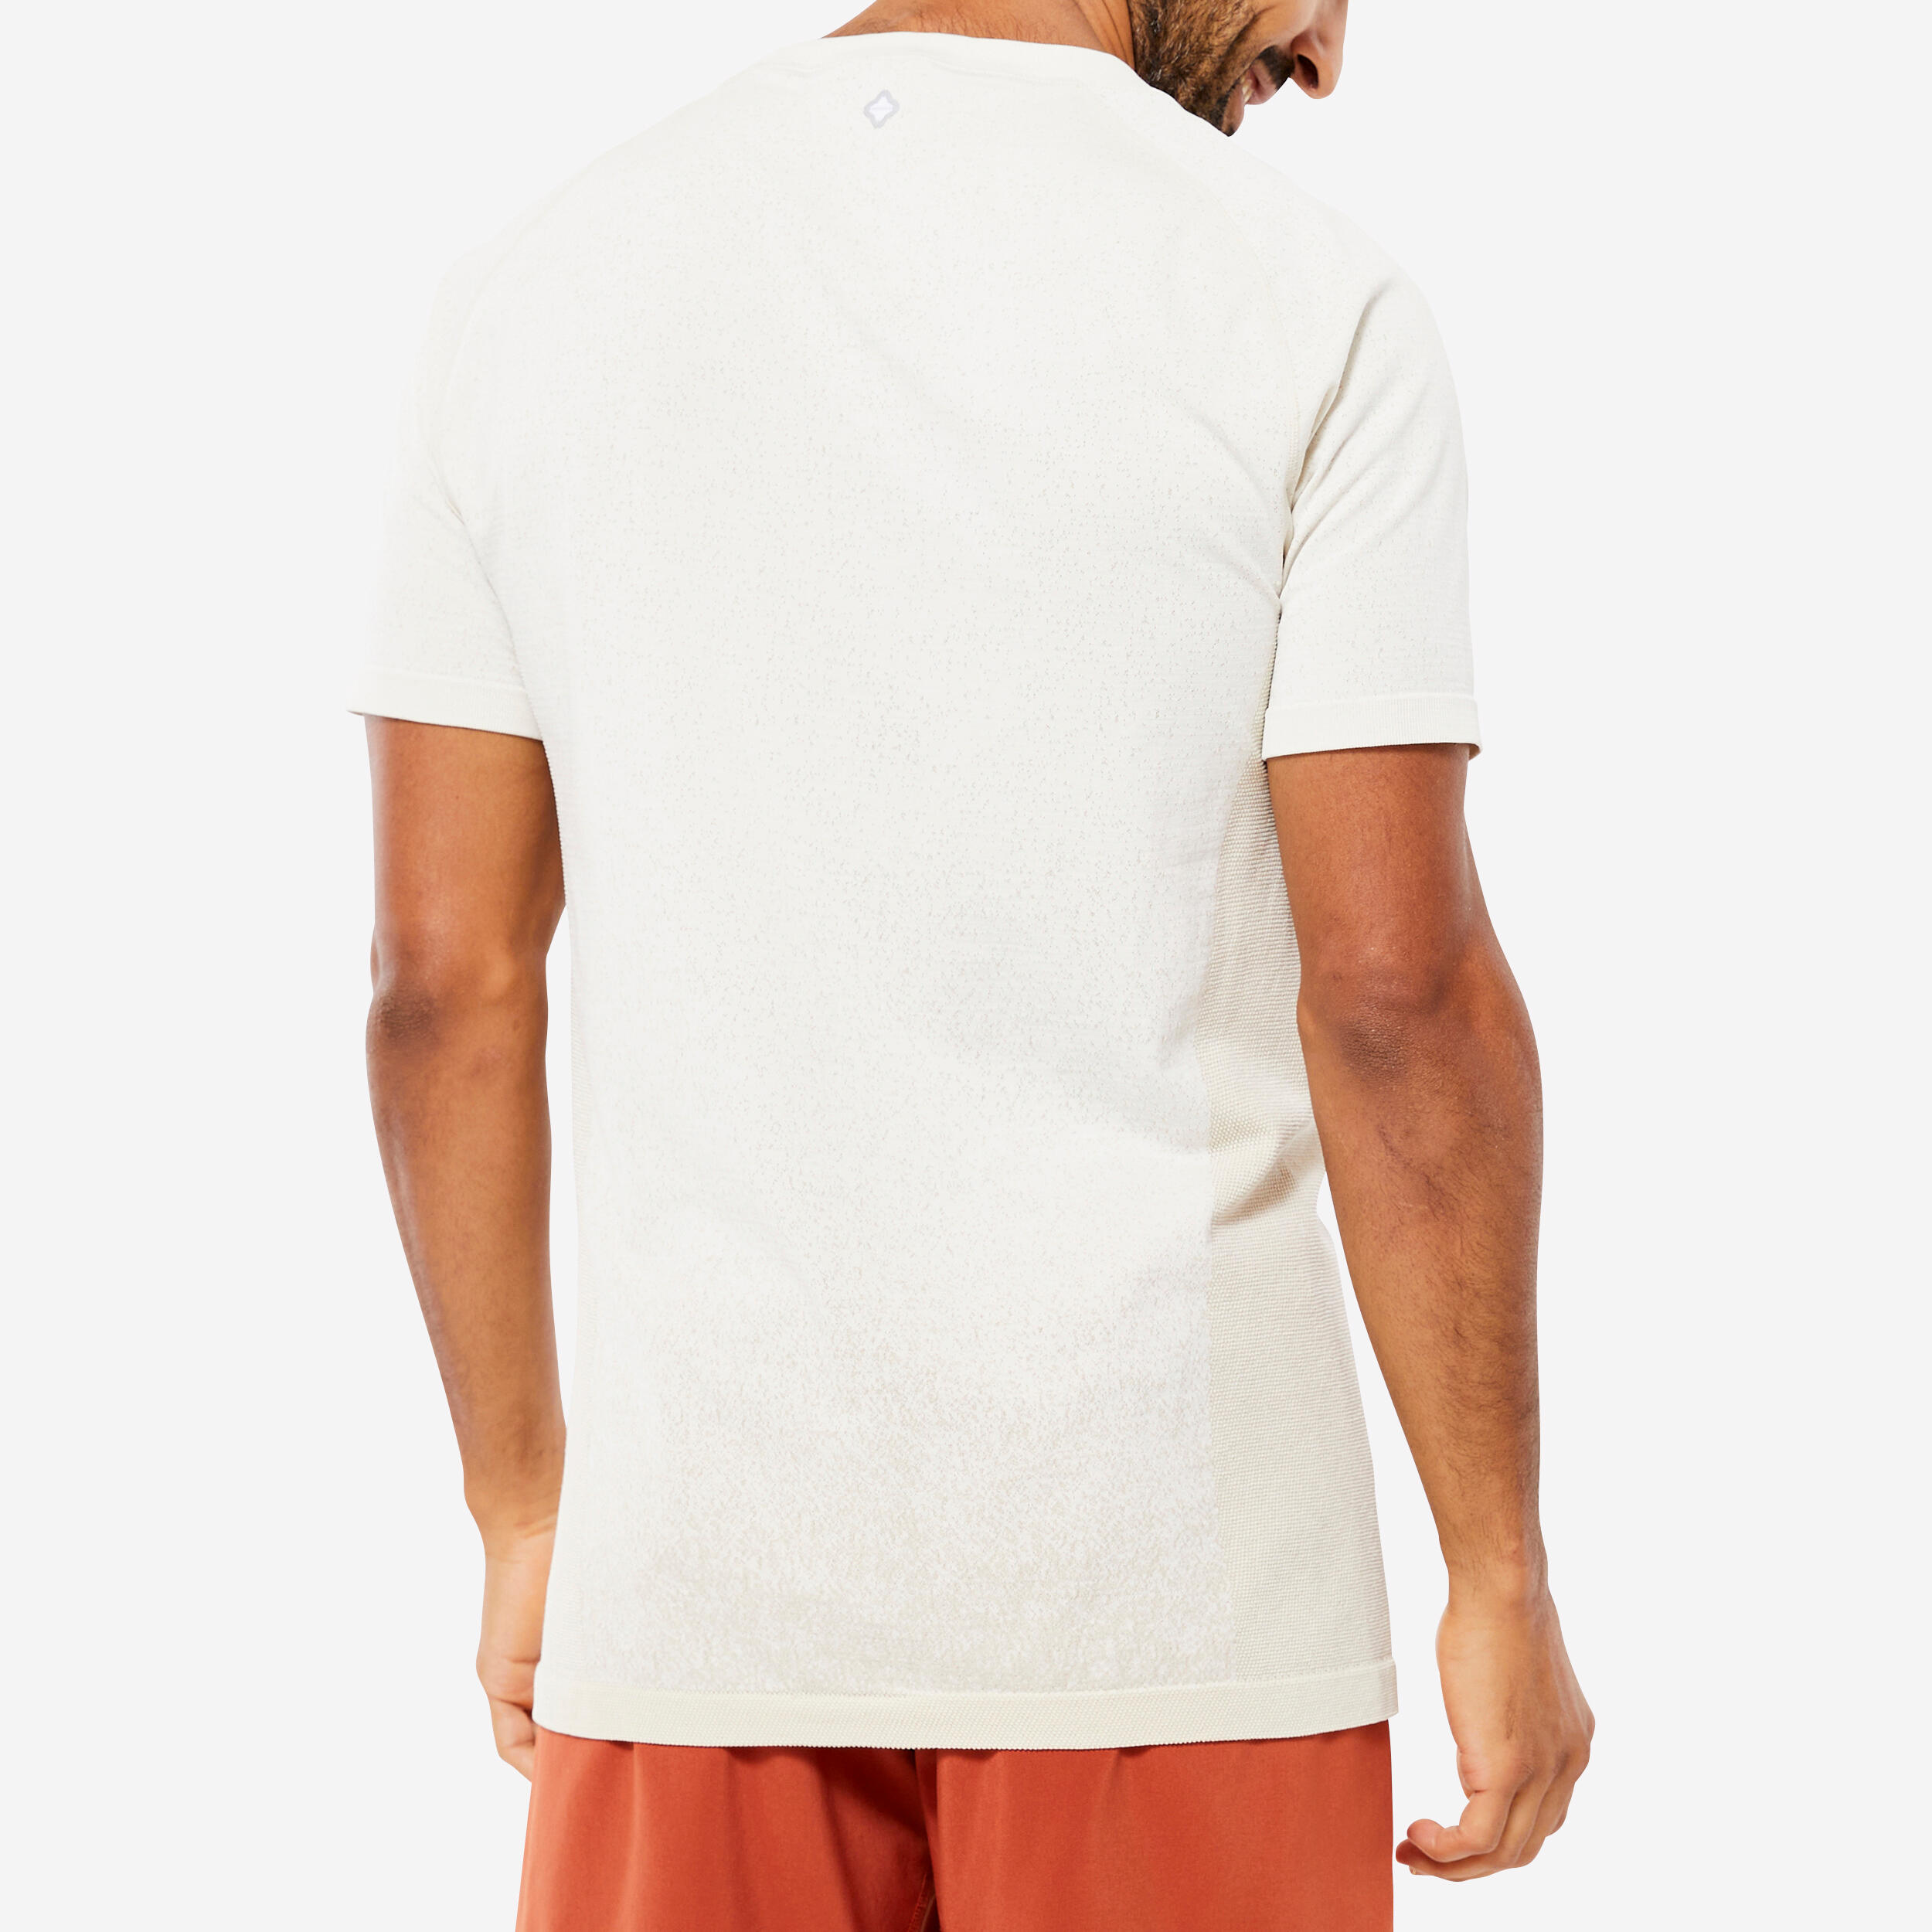 Men's Seamless Short-Sleeved Dynamic Yoga T-Shirt - Blue/Grey - Decathlon